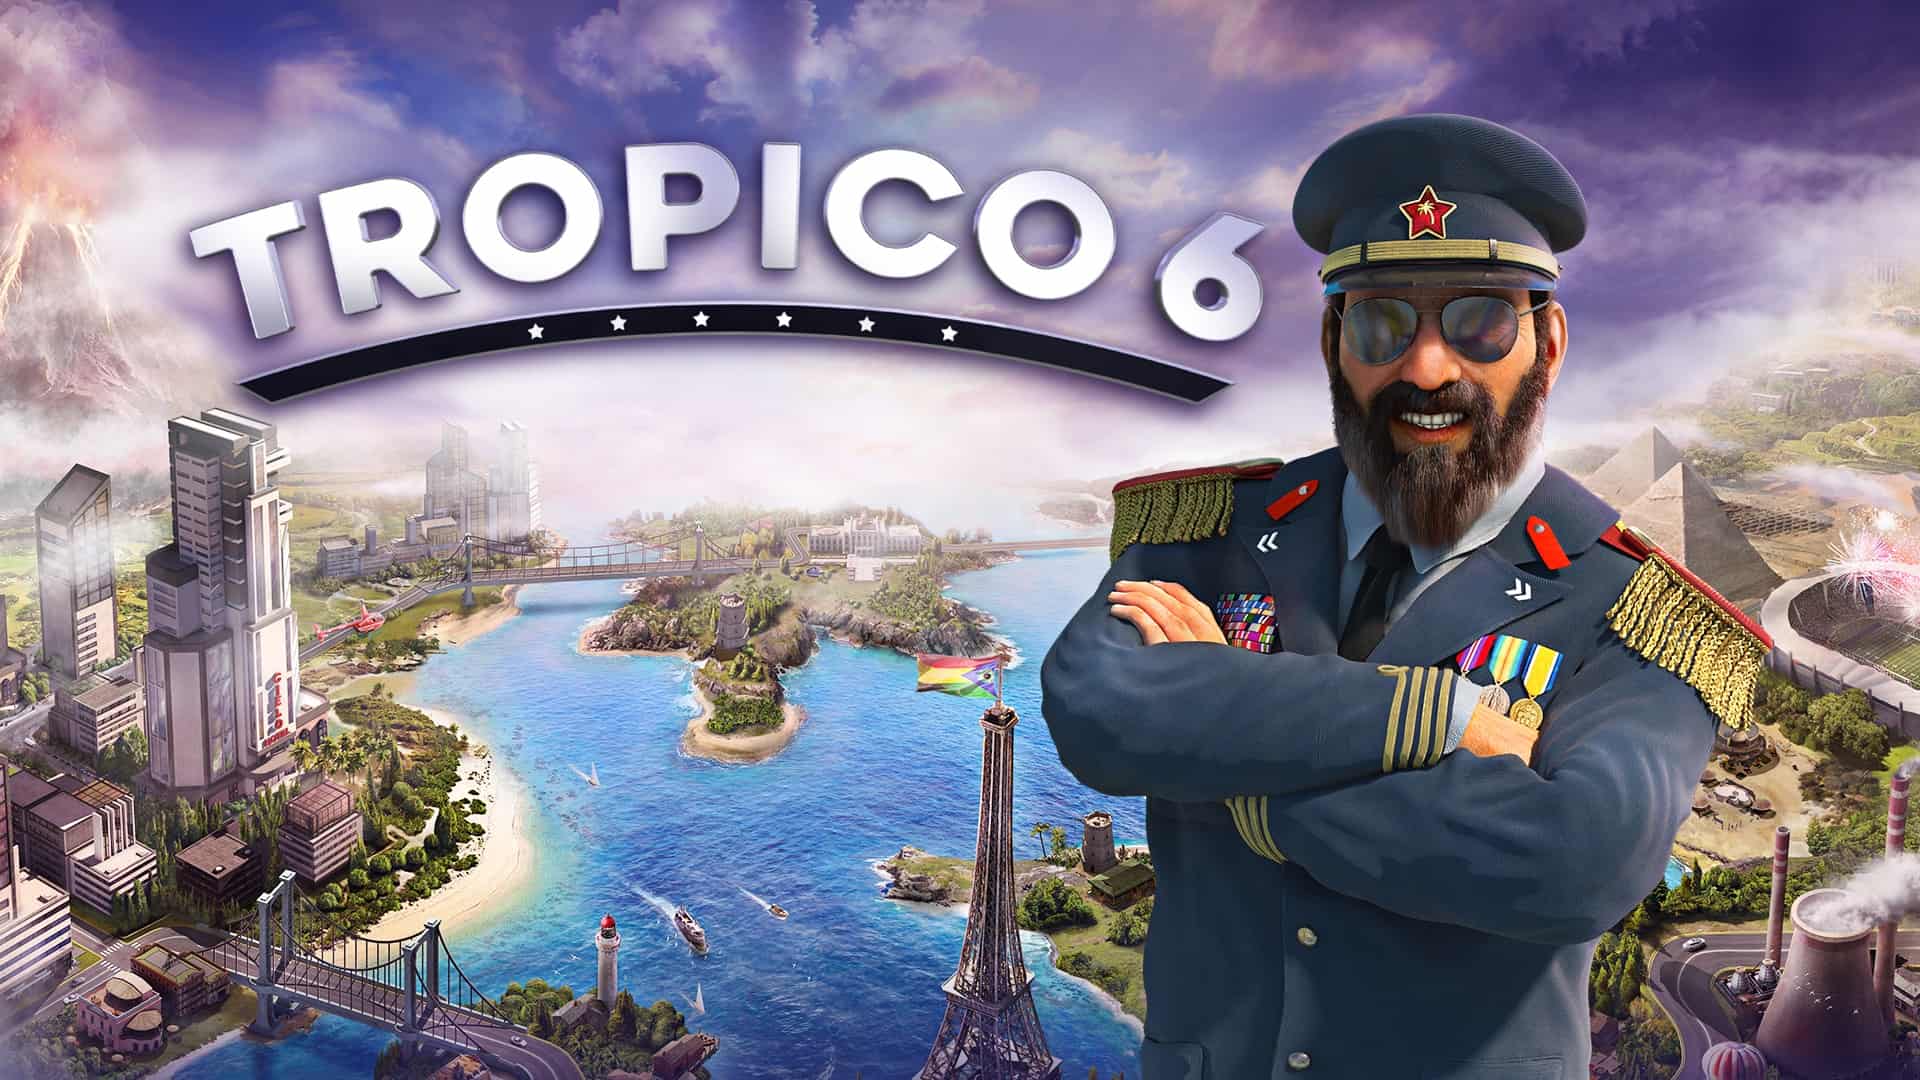 Main cover art with El Presidente posing in front of Tropico for Tropico 6